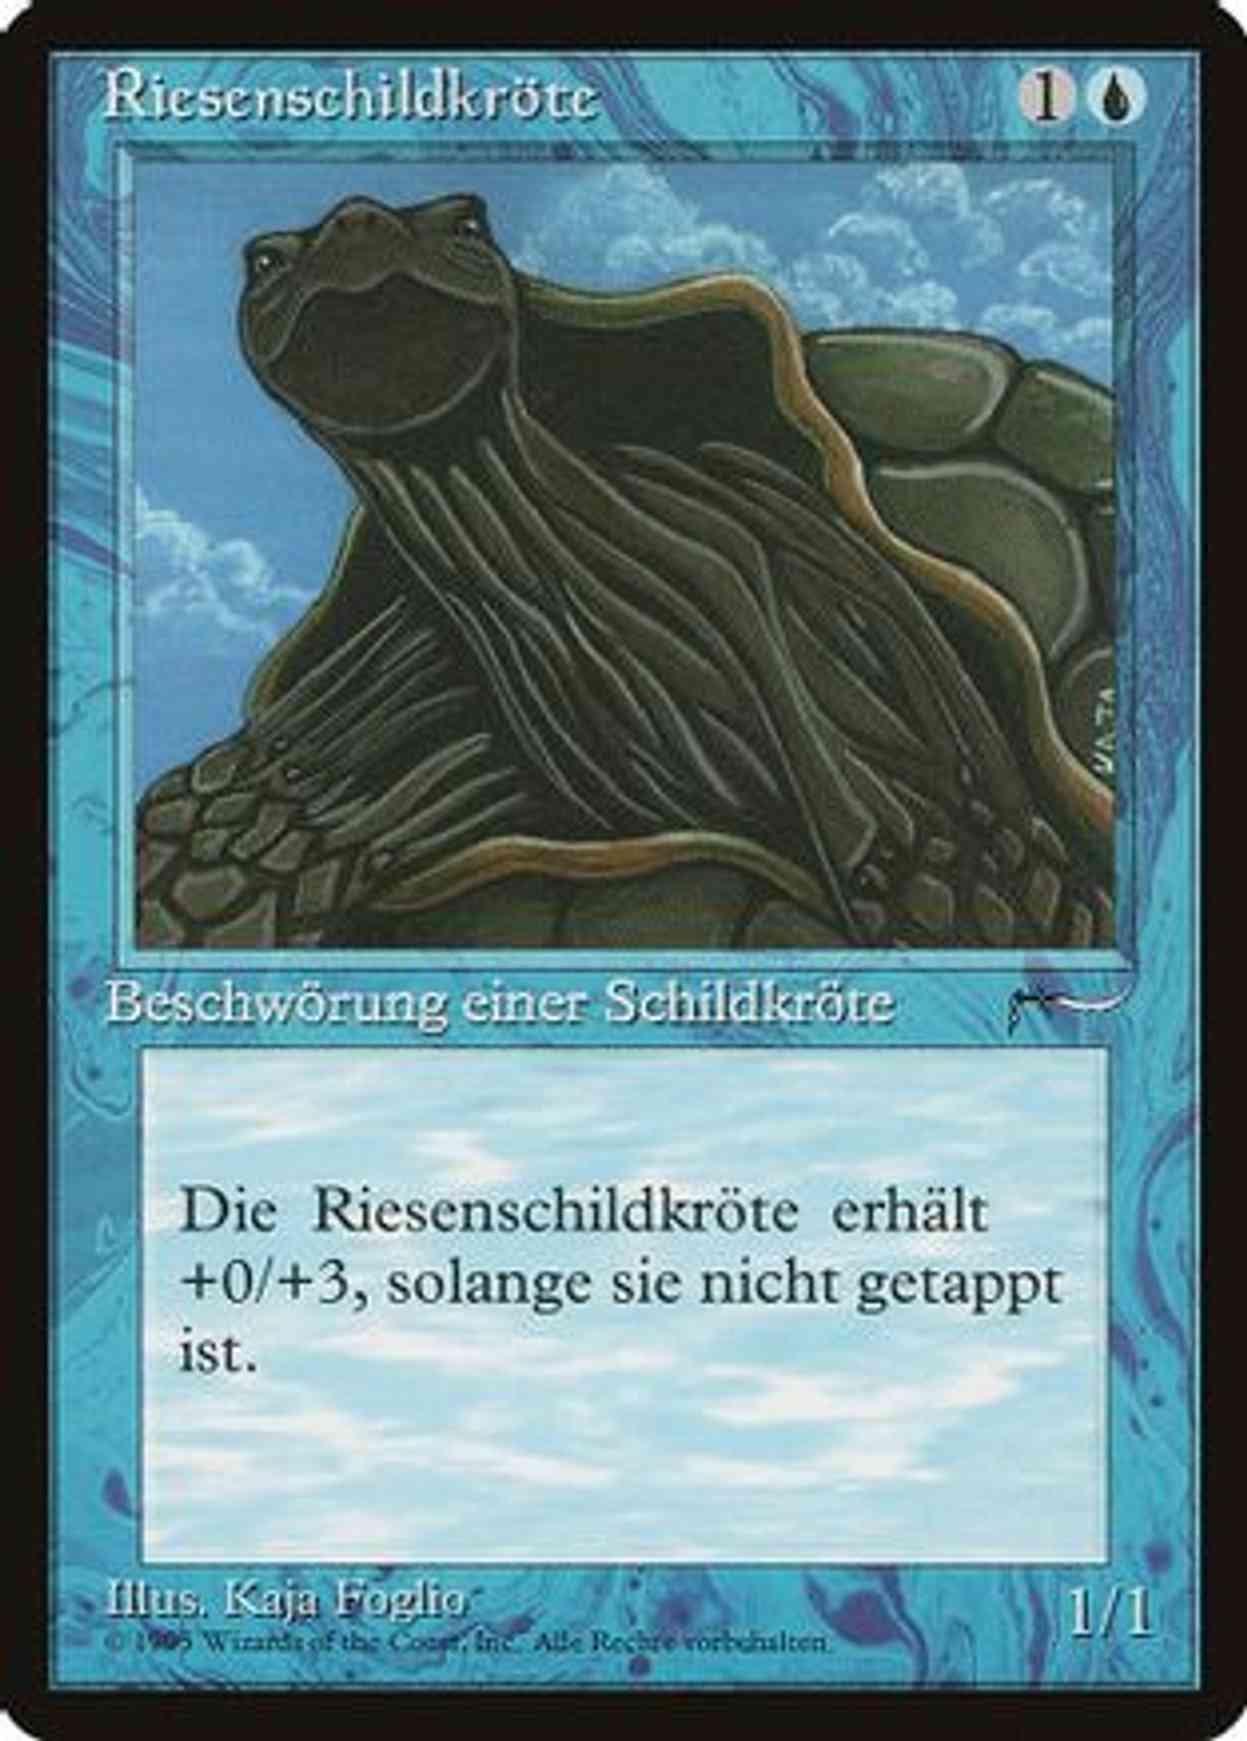 Giant Tortoise (German) - "Riesenschildkrote" magic card front